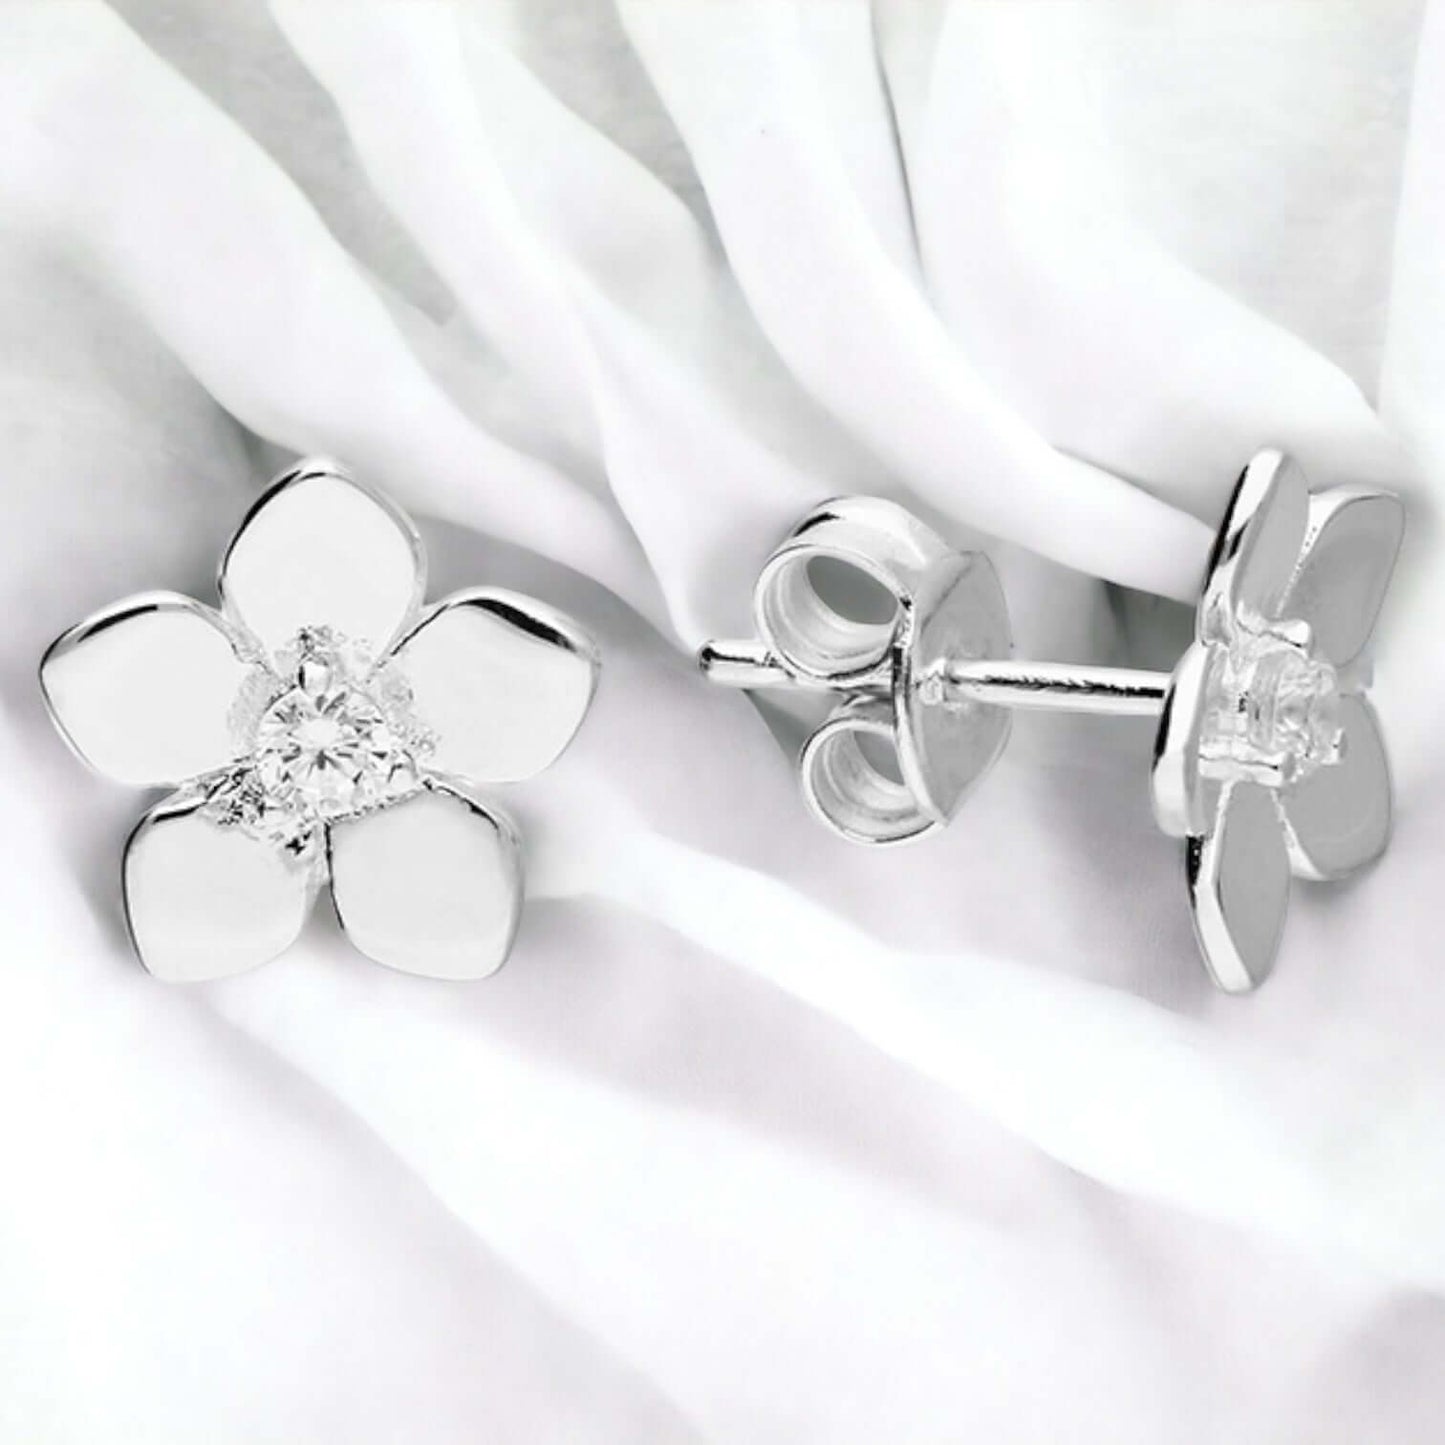 Meadow Flower Zirconia Sterling Silver Solitaire Stud Earrings - Twelve Silver Trees